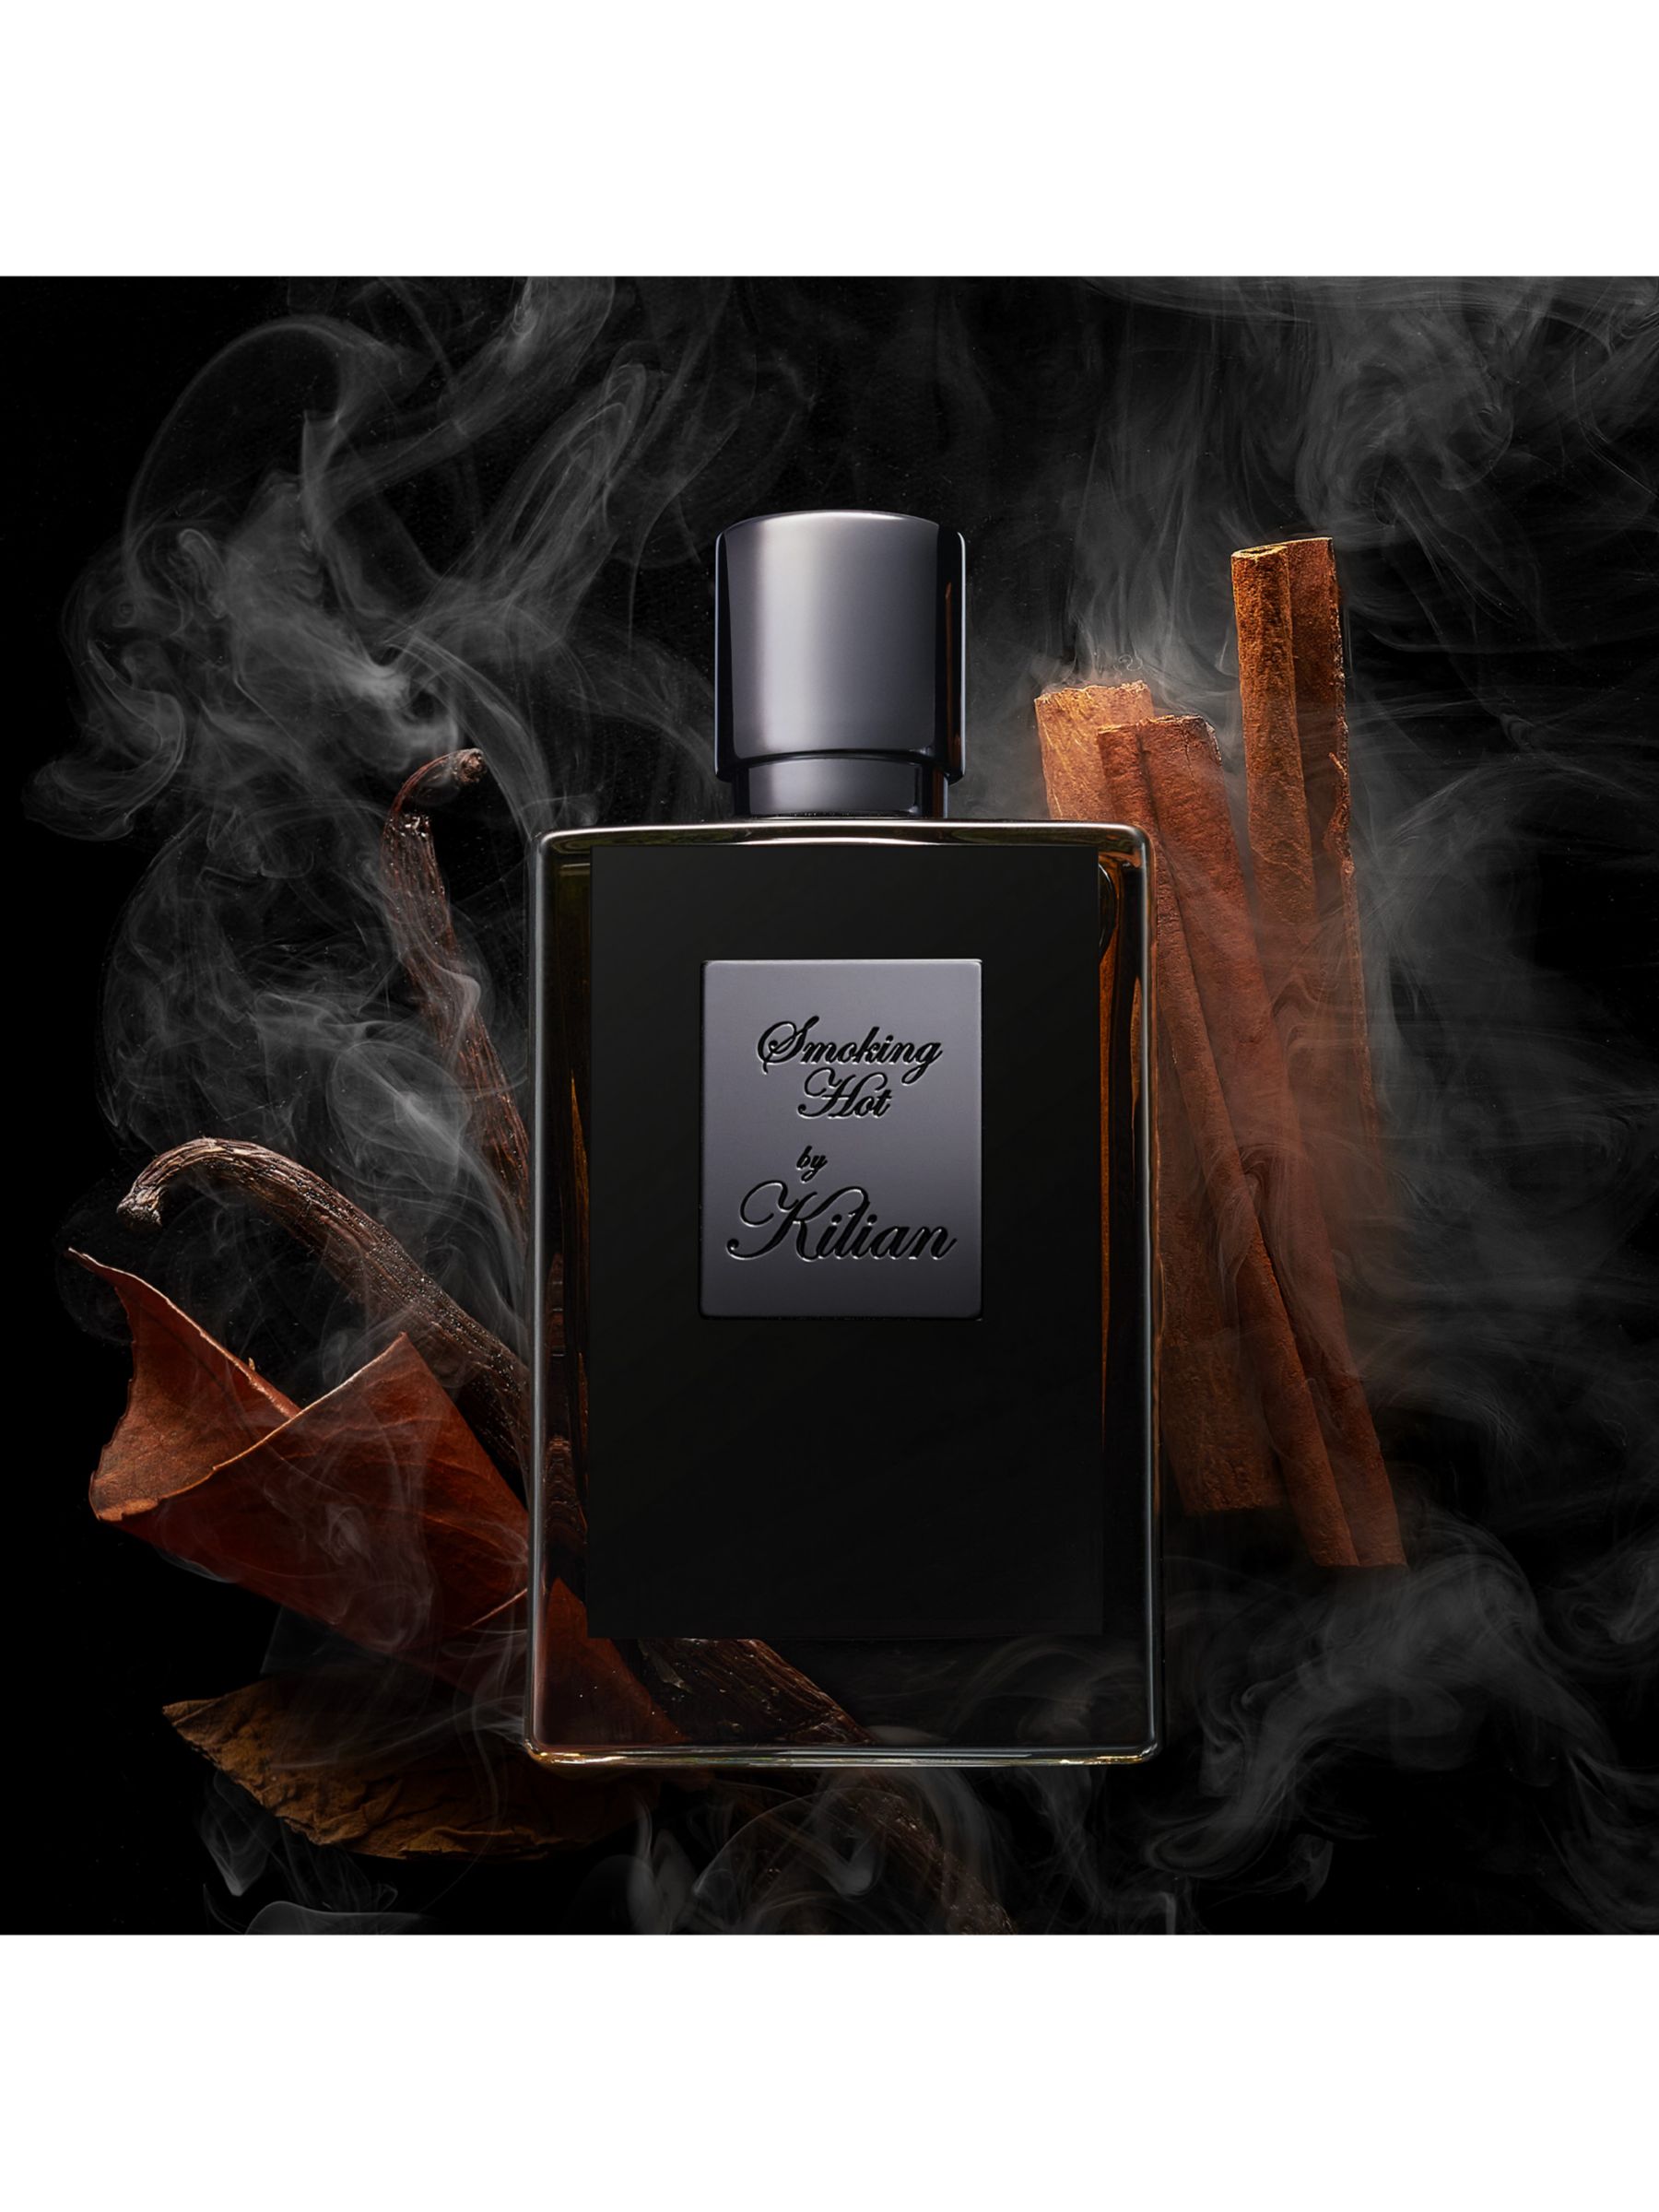 KILIAN PARIS Smoking Hot Eau de Parfum Refillable, 50ml